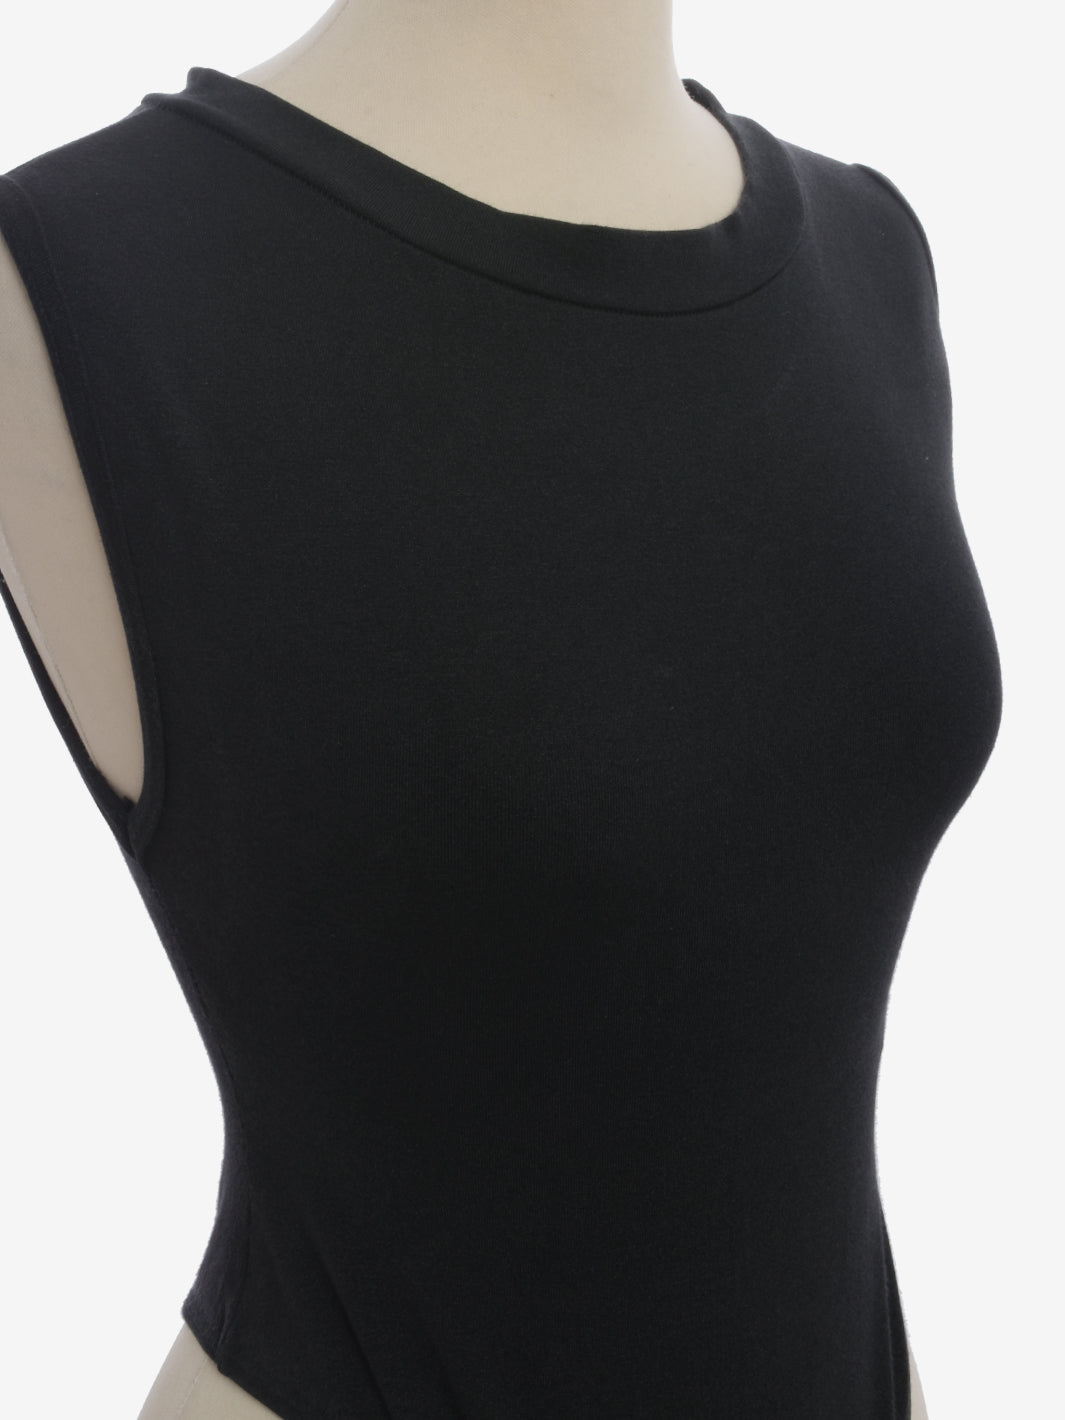 Alaïa Buttoned Bodysuit - 80s